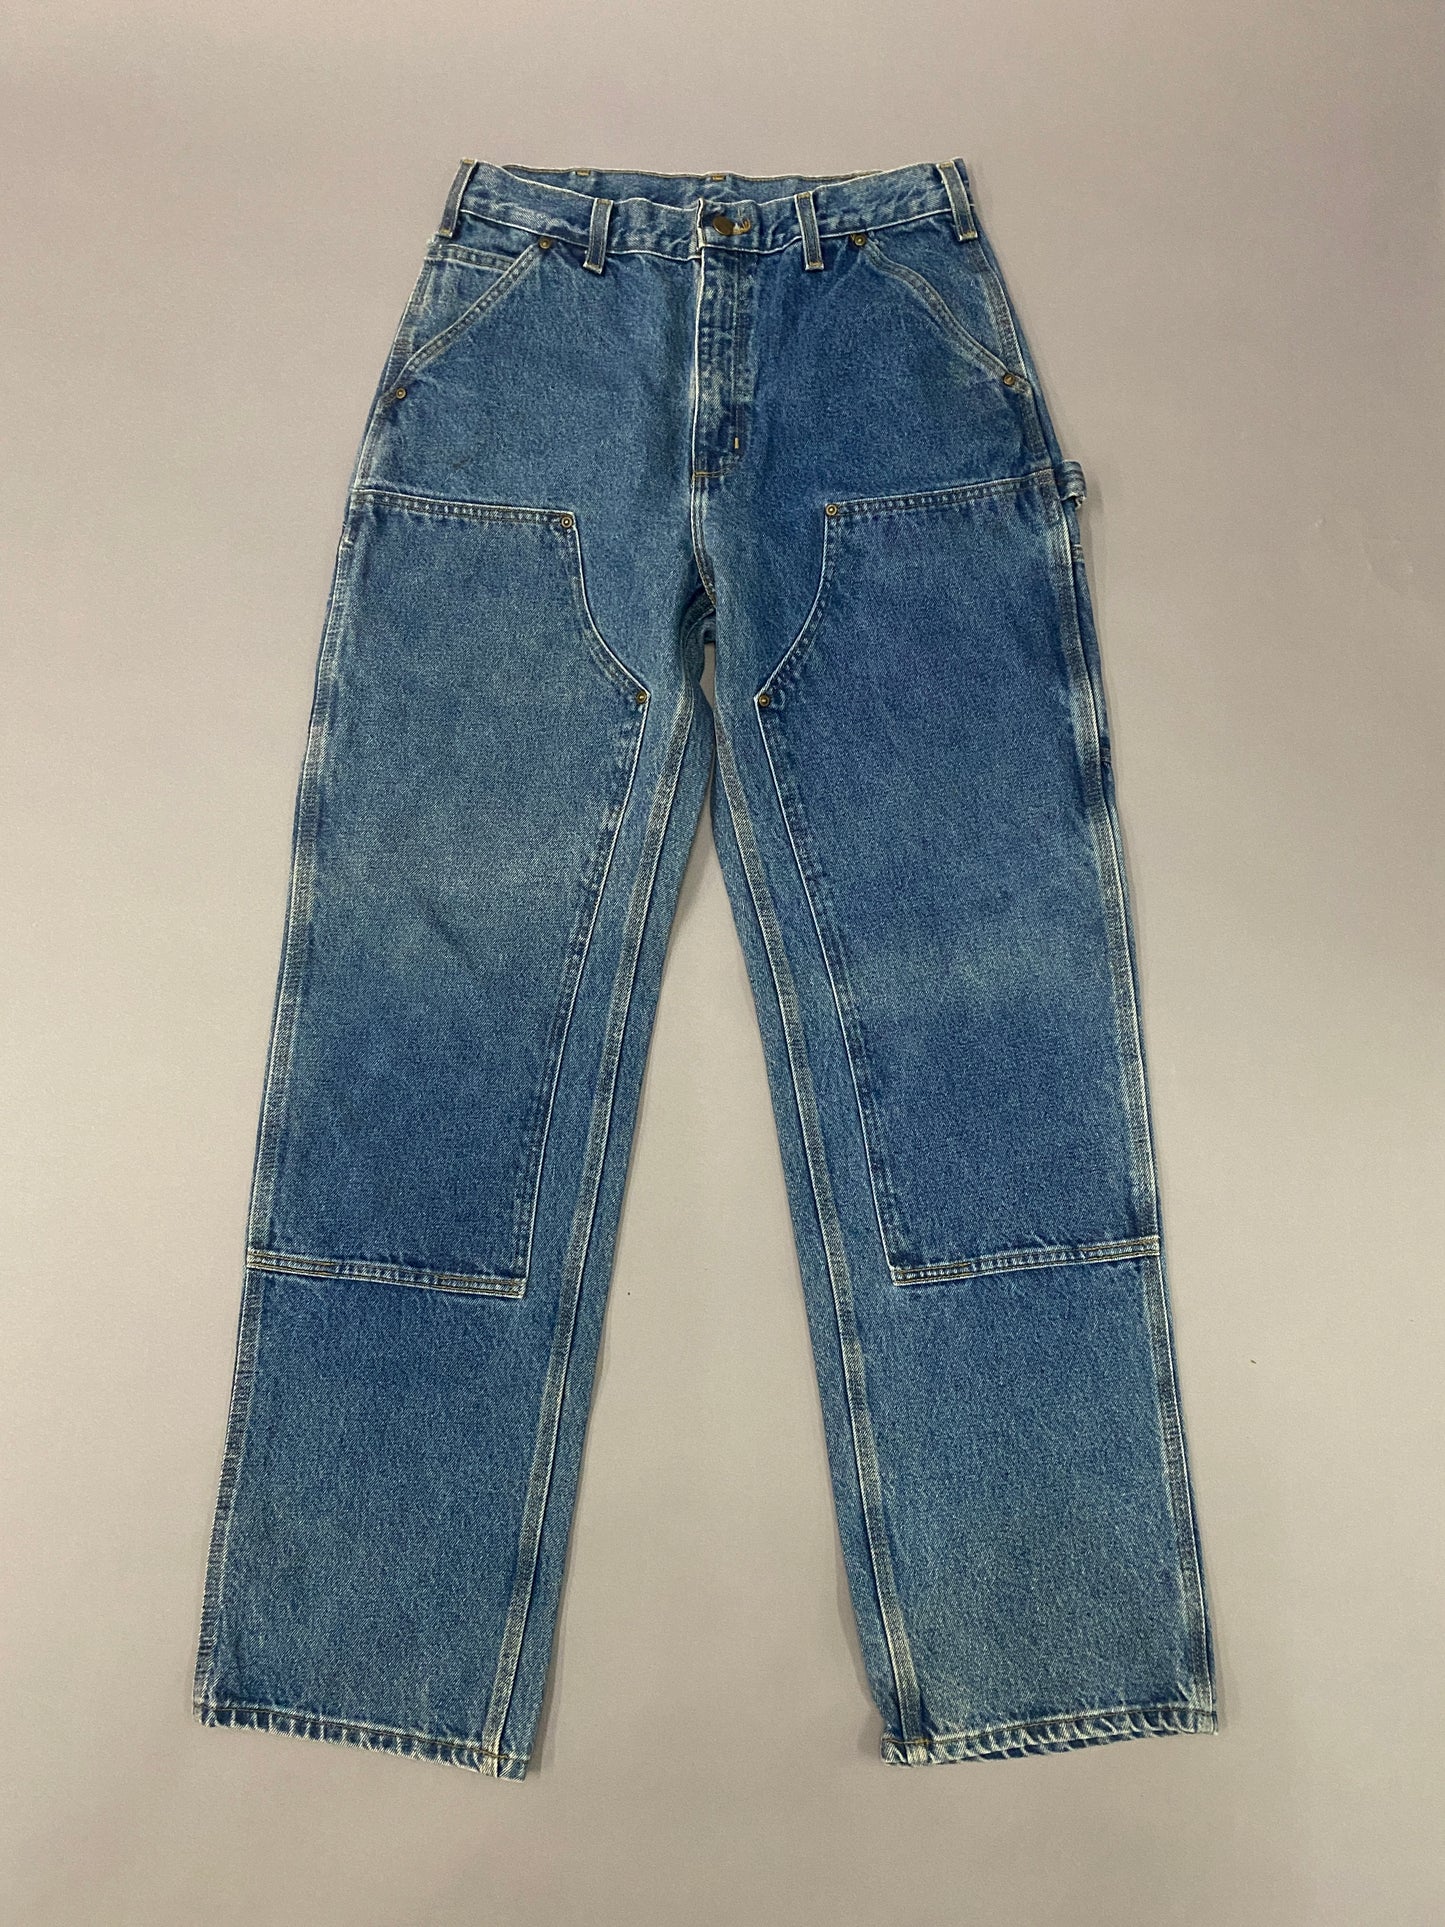 Double Knee Carhartt Jeans Vintage - 33 x 34